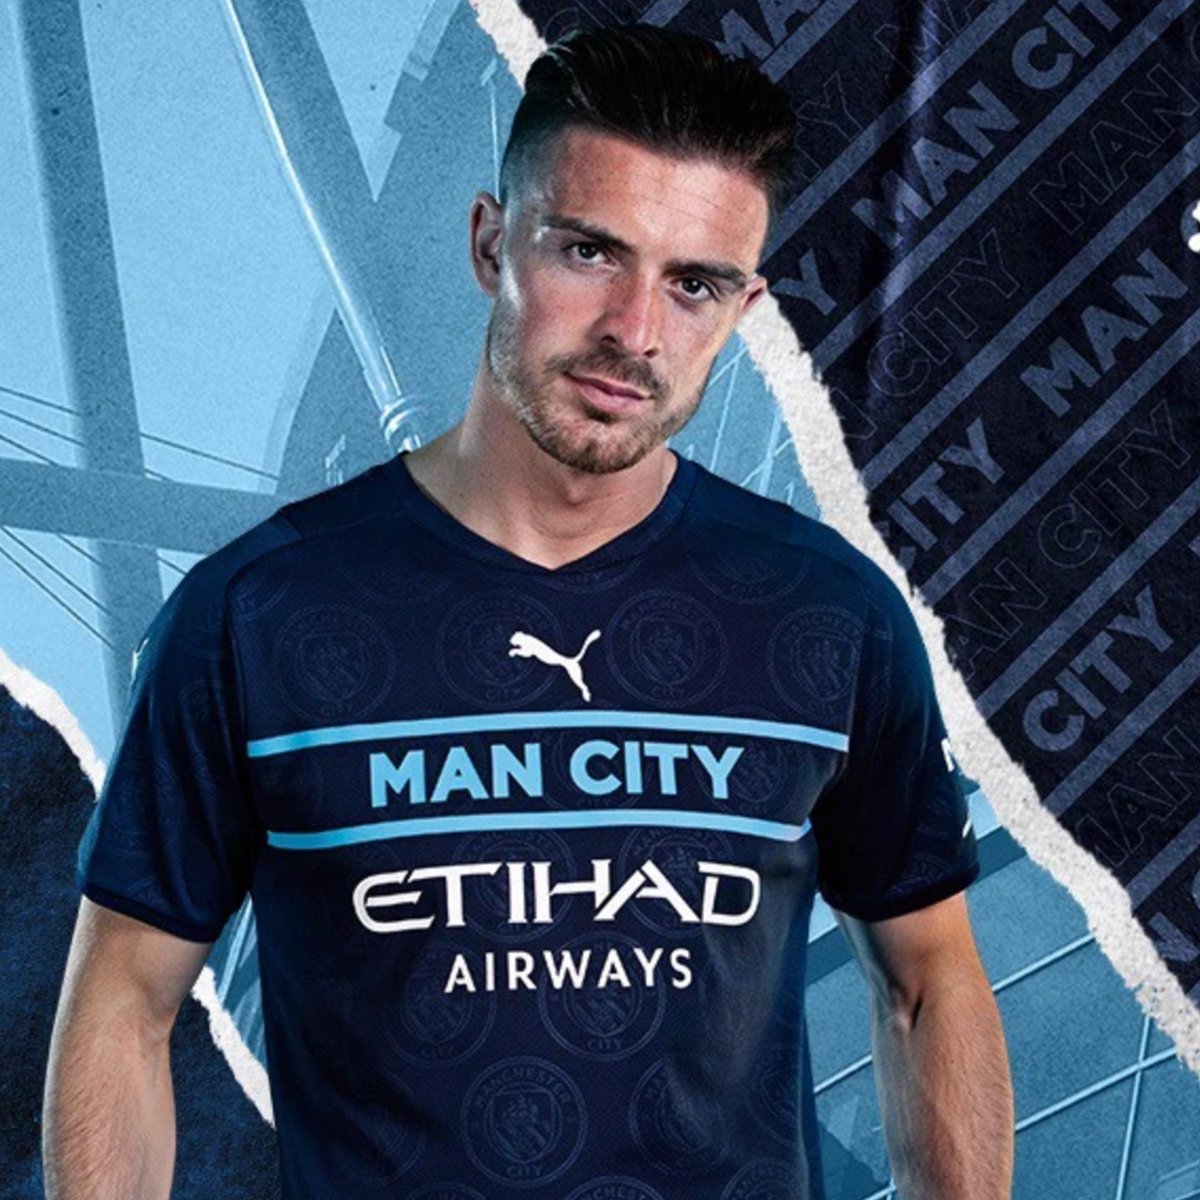 New Manchester City 3rd Kit Gets on Social Media